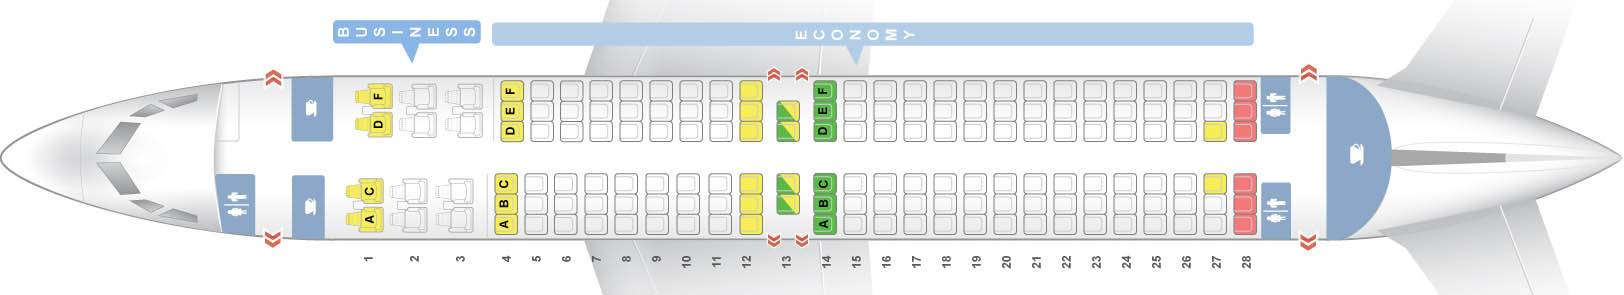 Схема салона боинг 737 800 авиакомпании победа. схема салона и выбор места у «победы